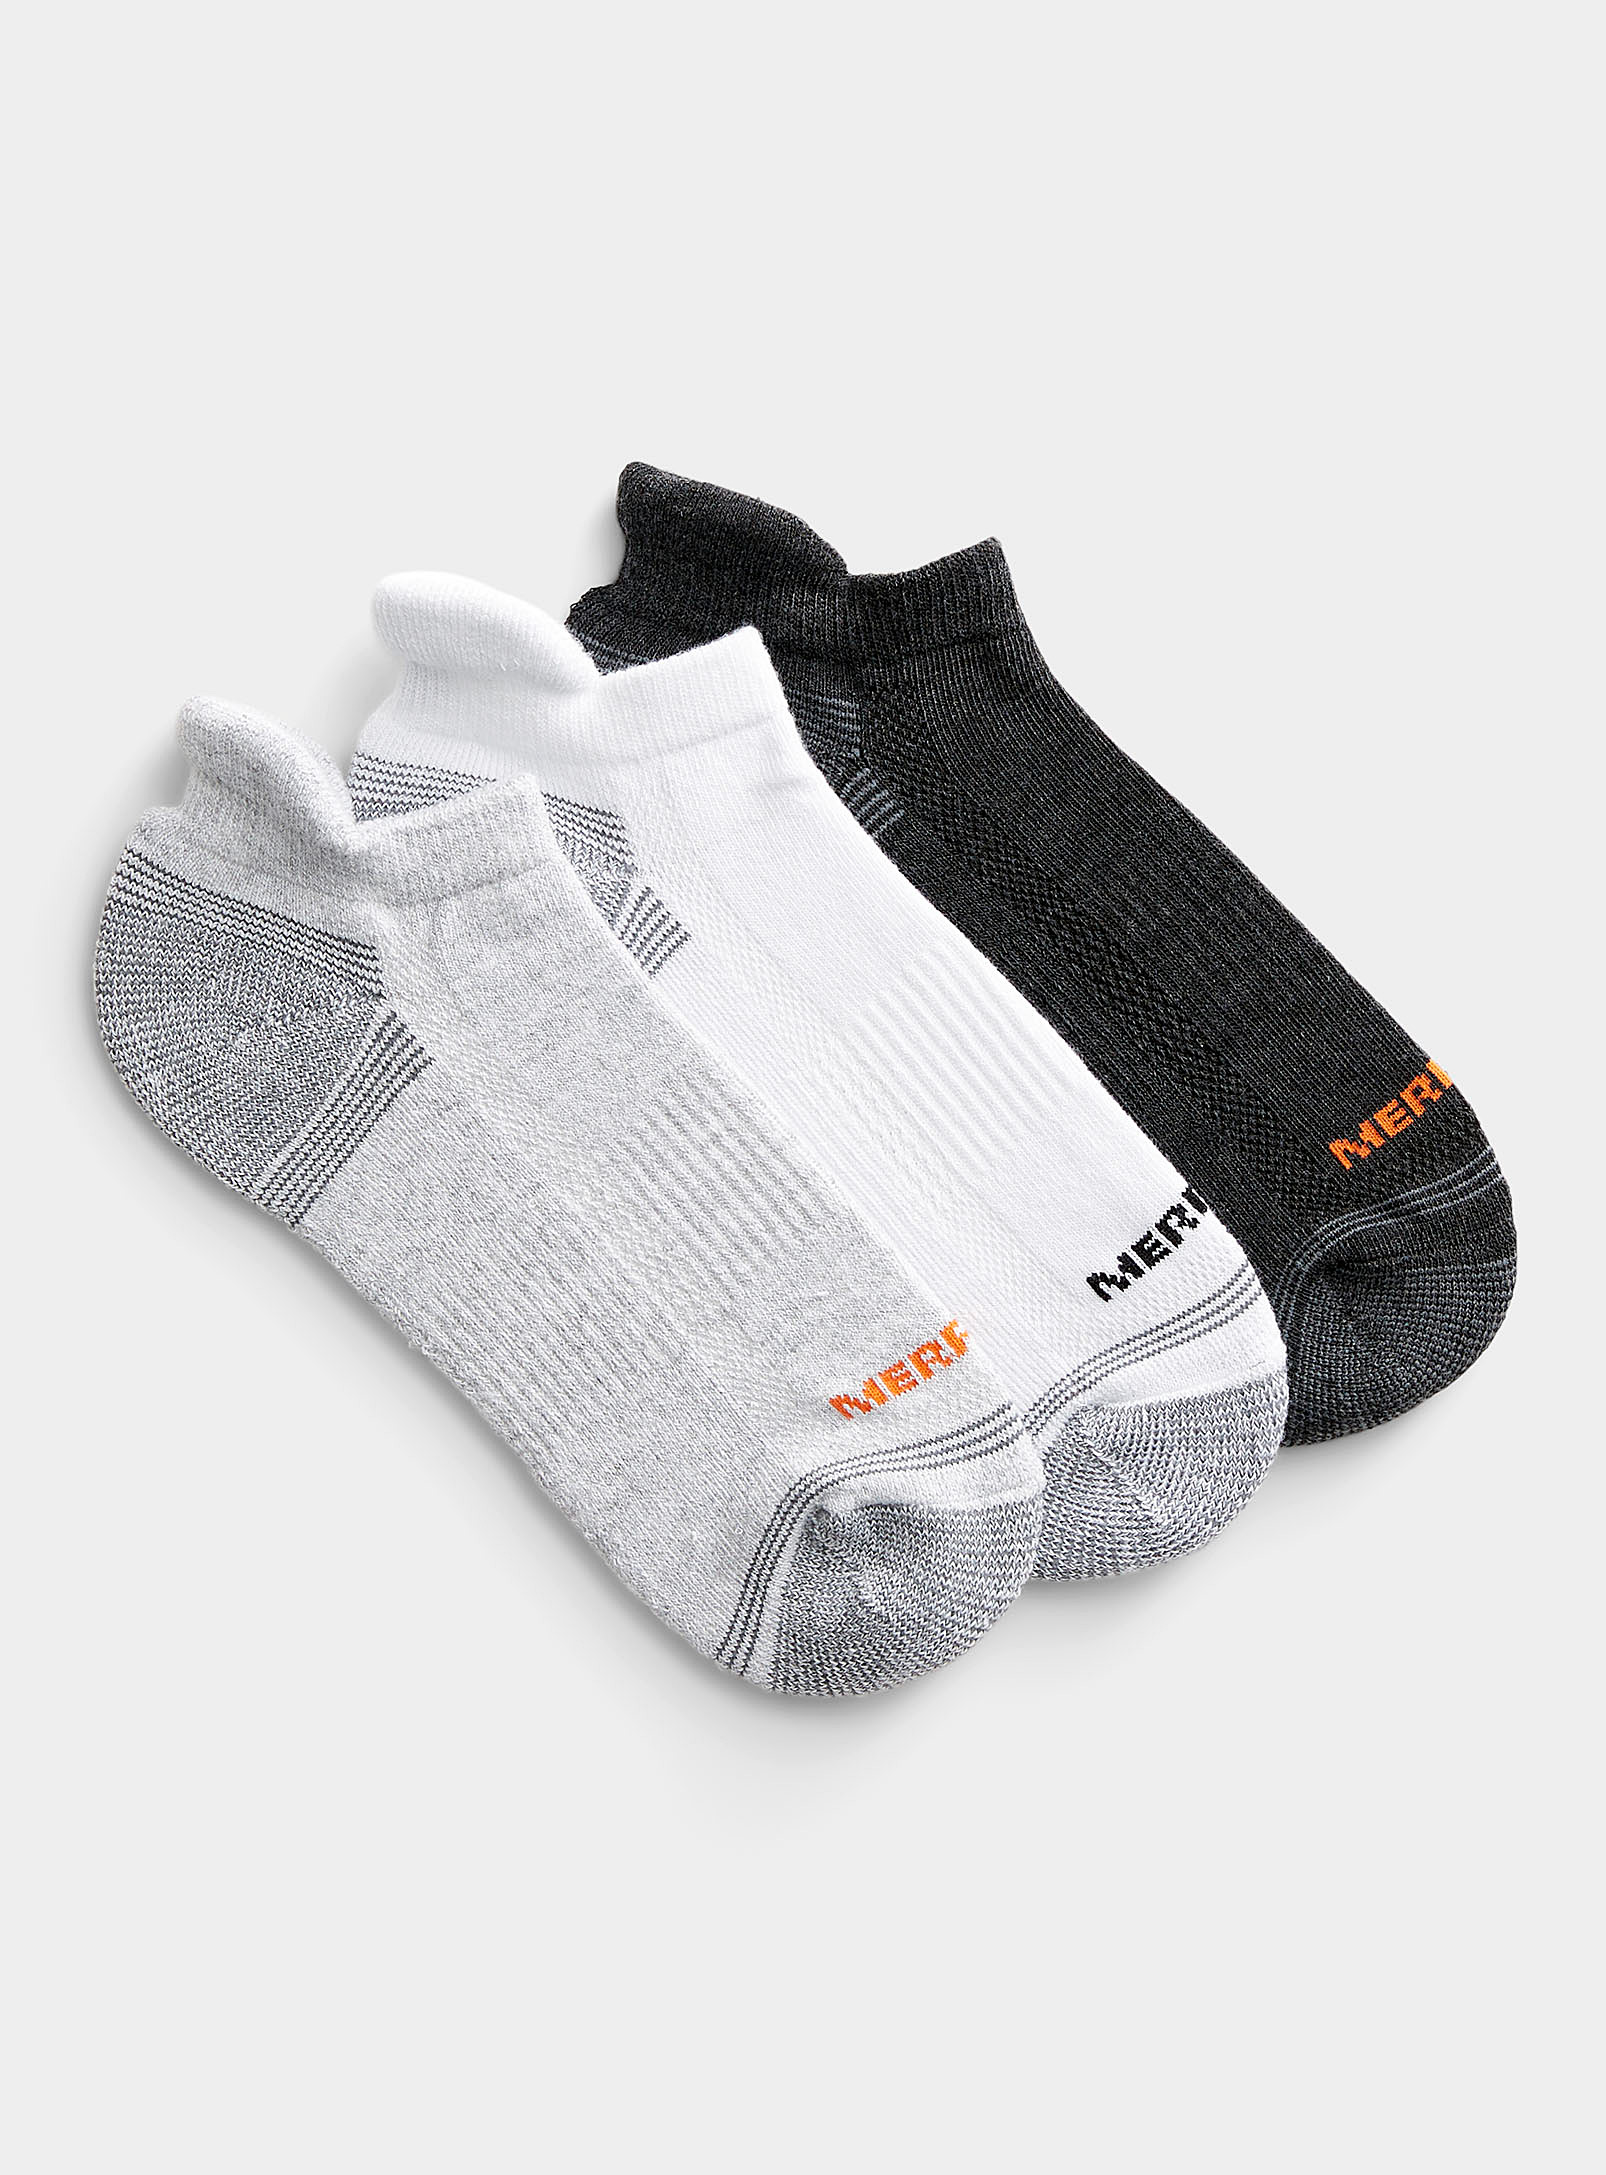 Merrell Logo Heathered Ped Sock Set Of 3 In Grey